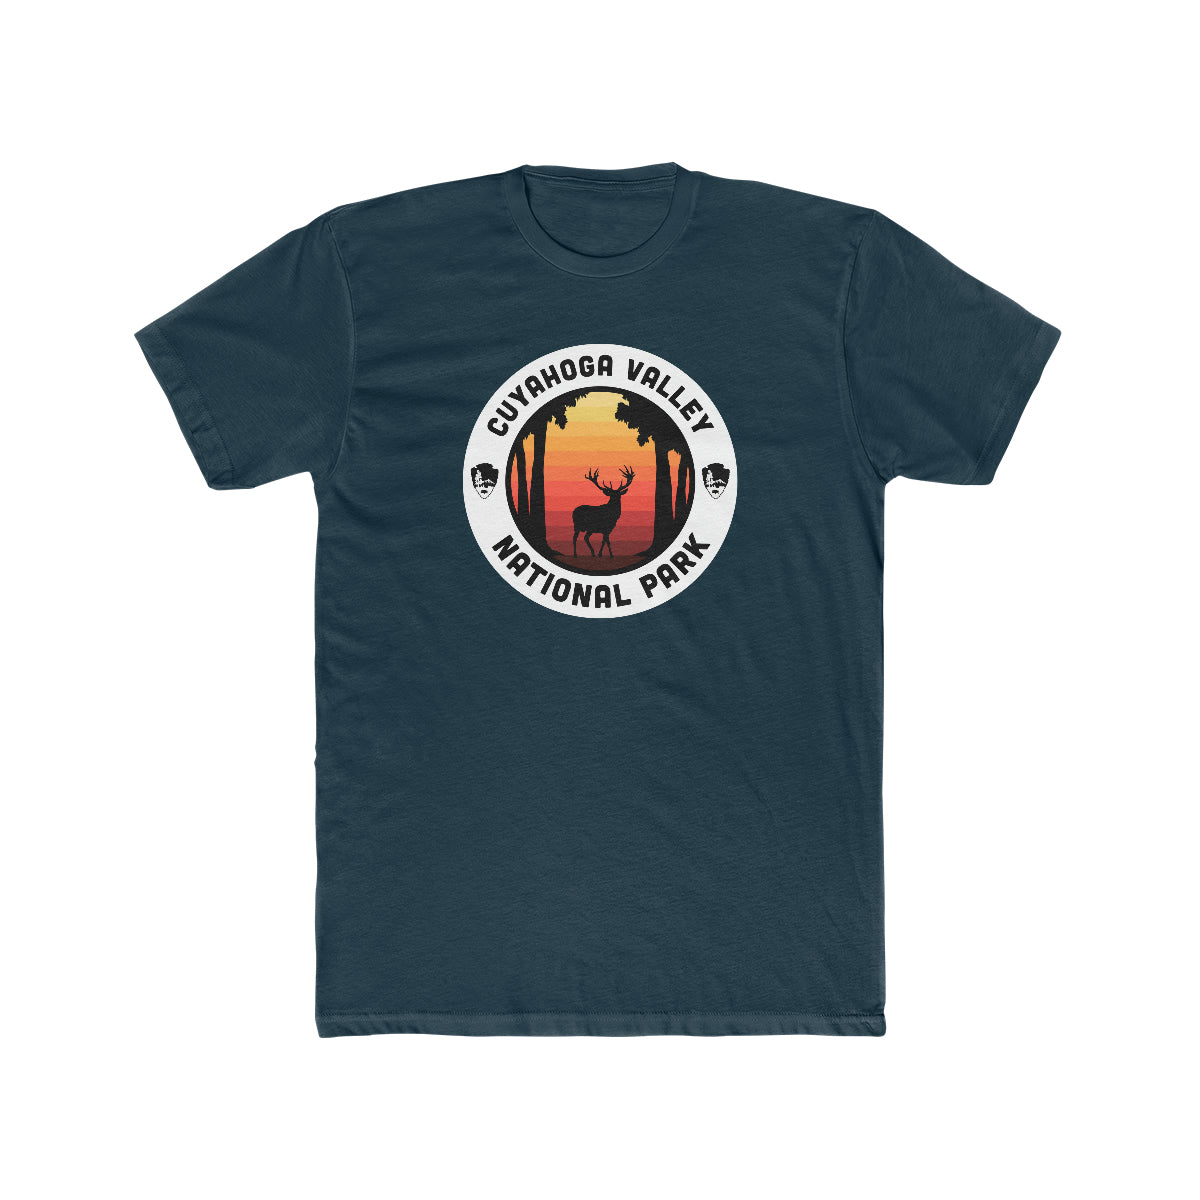 Cuyahoga Valley National Park T-Shirt - Round Badge Design